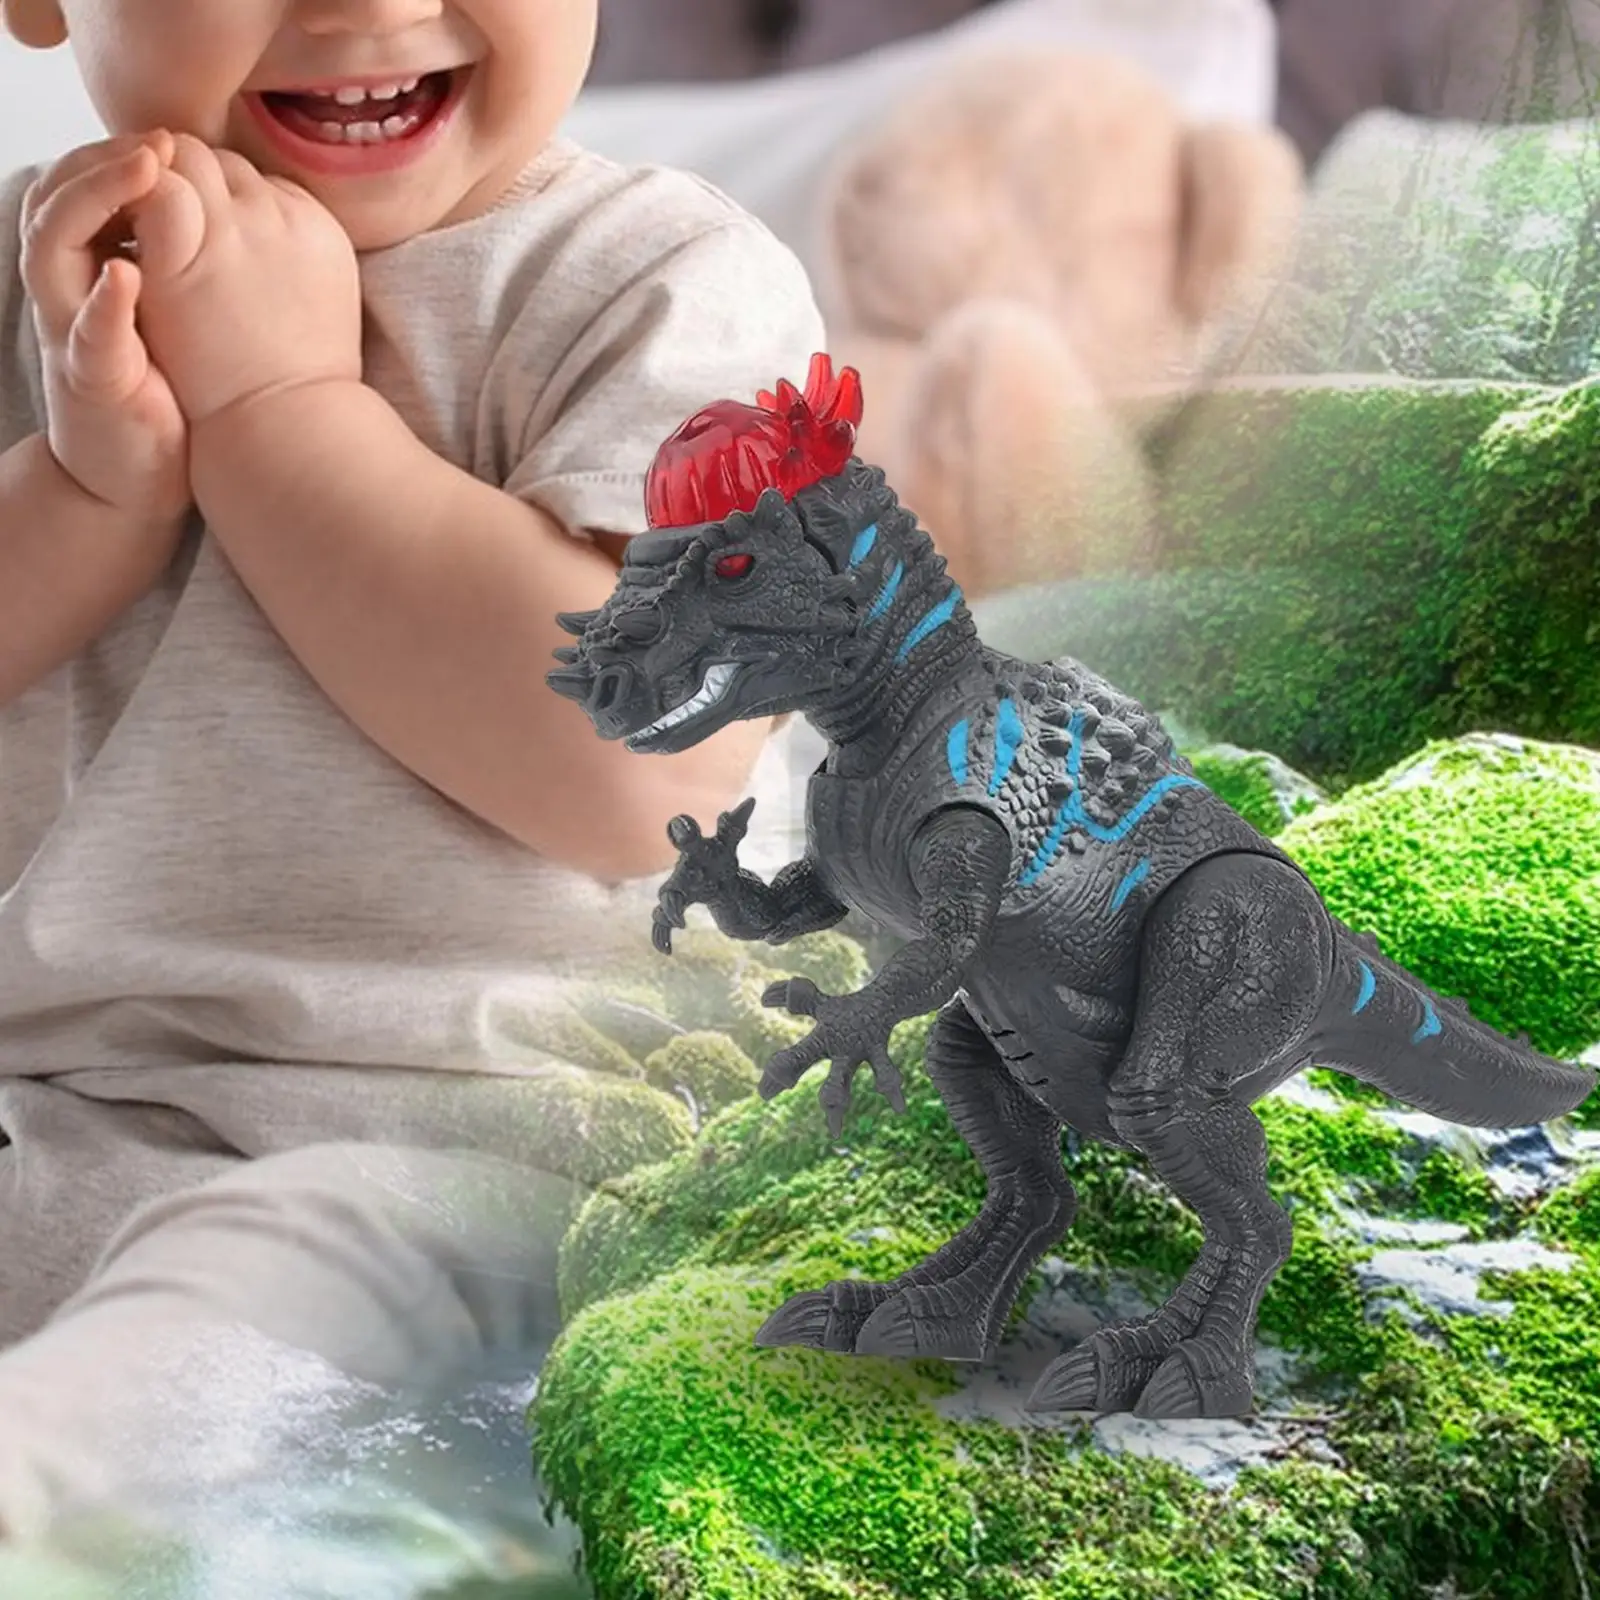 Electric Dinosaur Toys, Action Figure Simulation sound Lighting Movable Dinosaur Model Dinosaur Toy for Kids, for kids 5, 4 7,8